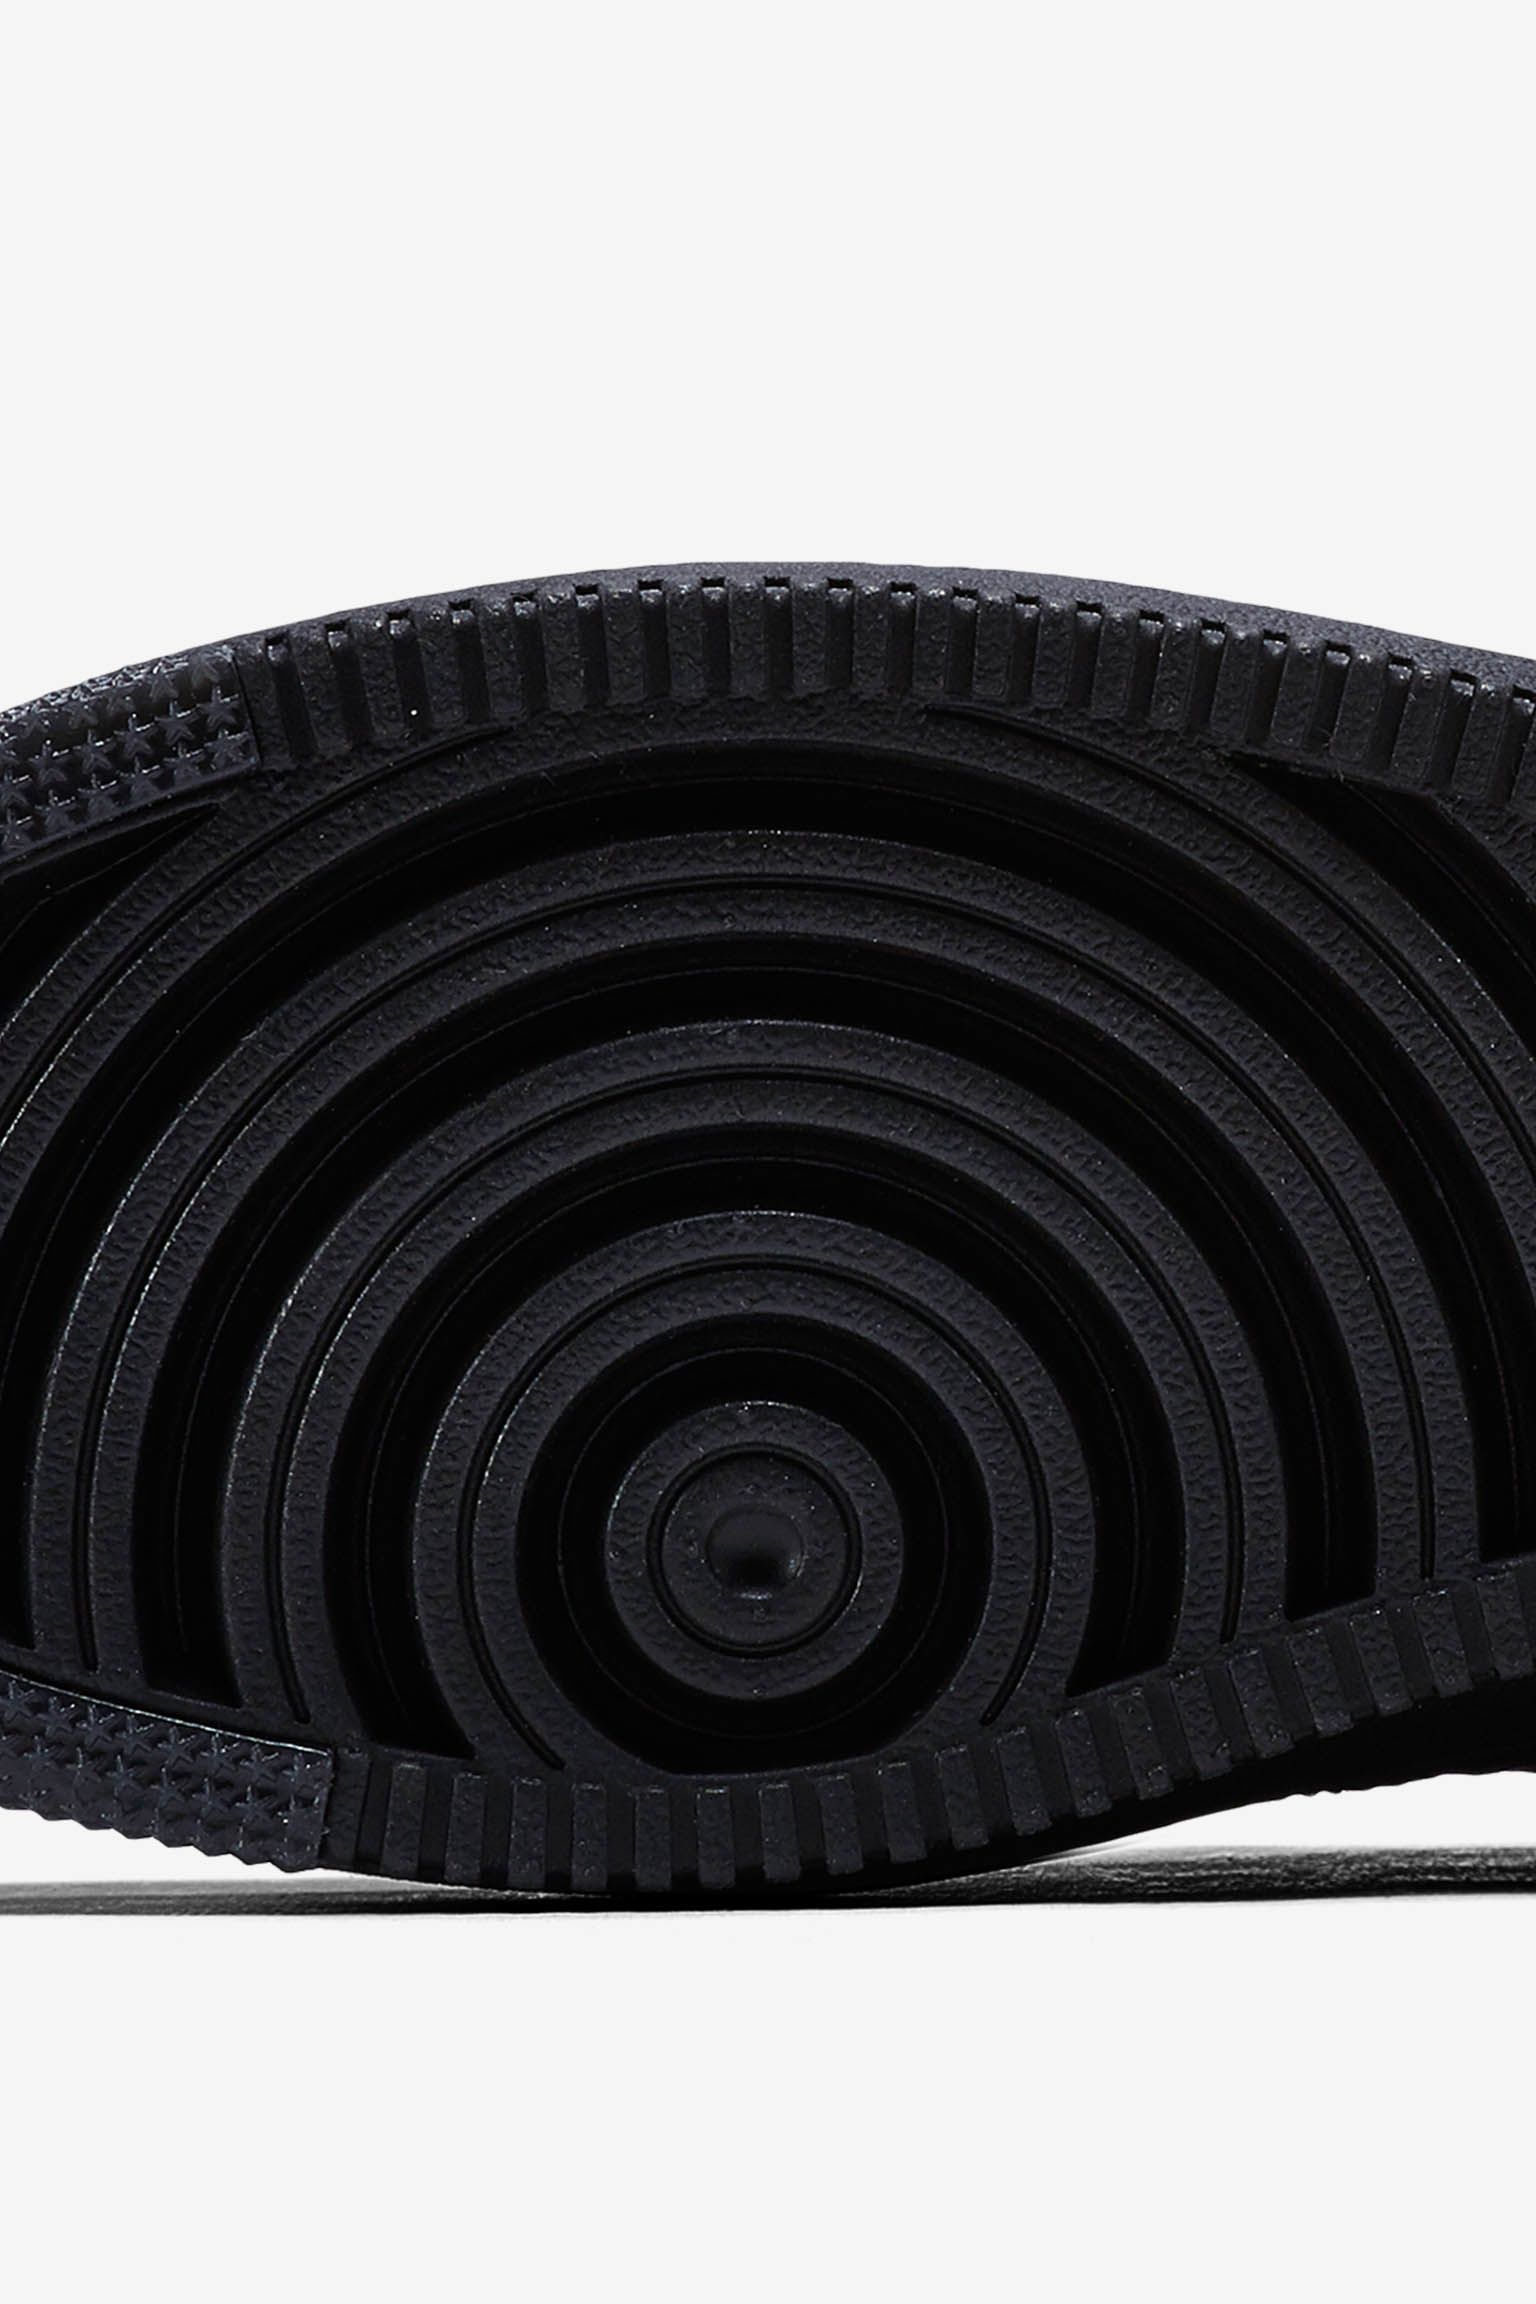 Nike Air Force 1 Ultra Flyknit Low 'Black & Metallic Silver'. Nike SNKRS